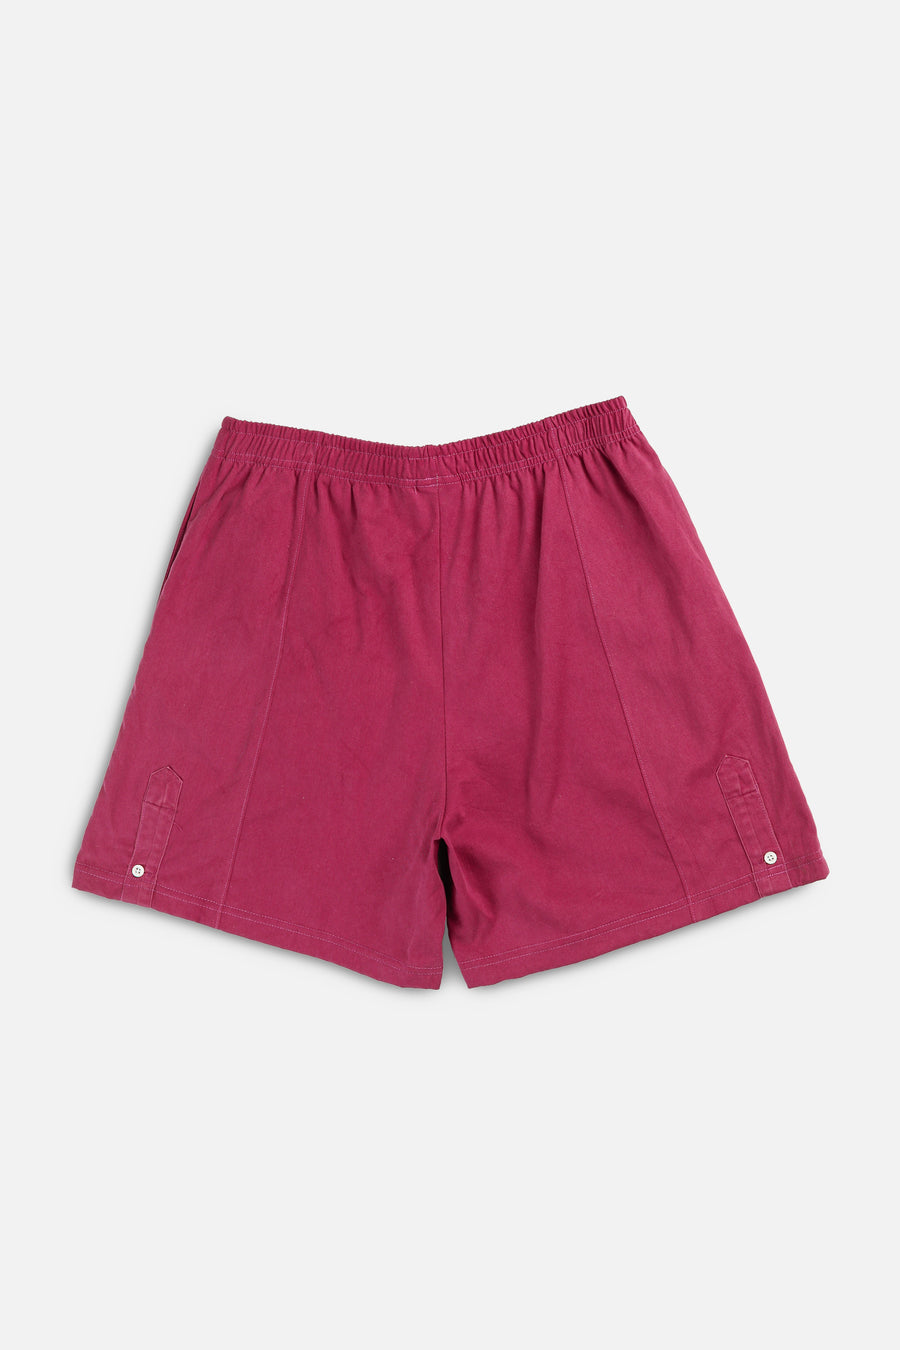 Unisex Rework Oxford Boxer Shorts - L